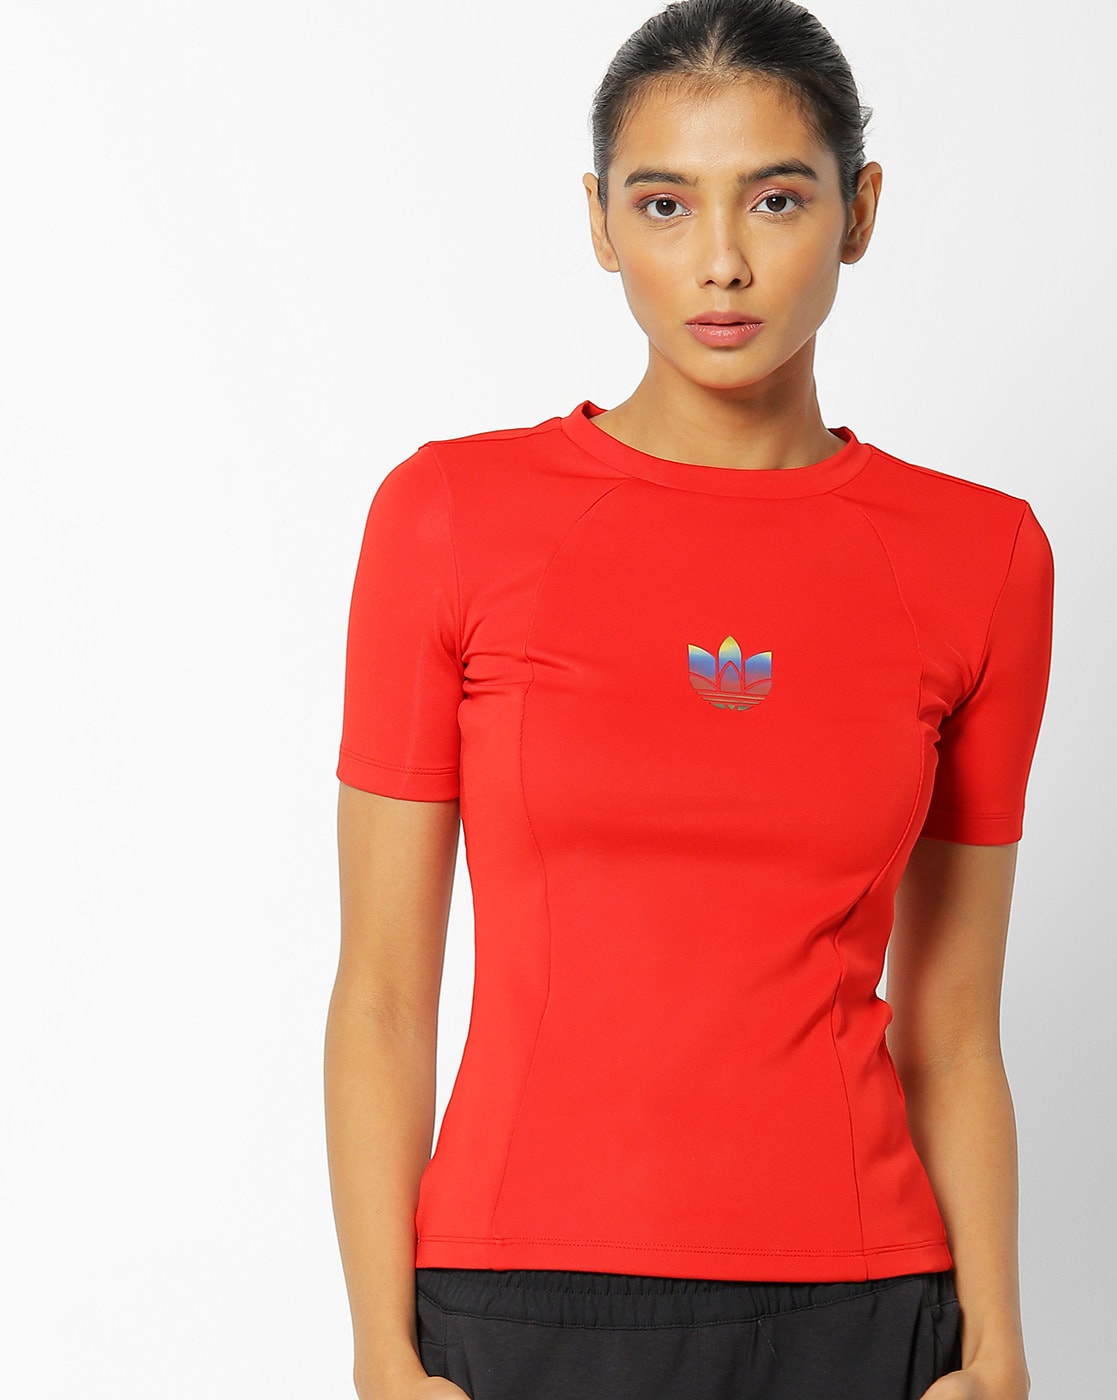 Red Tshirts for Originals Online | Ajio.com